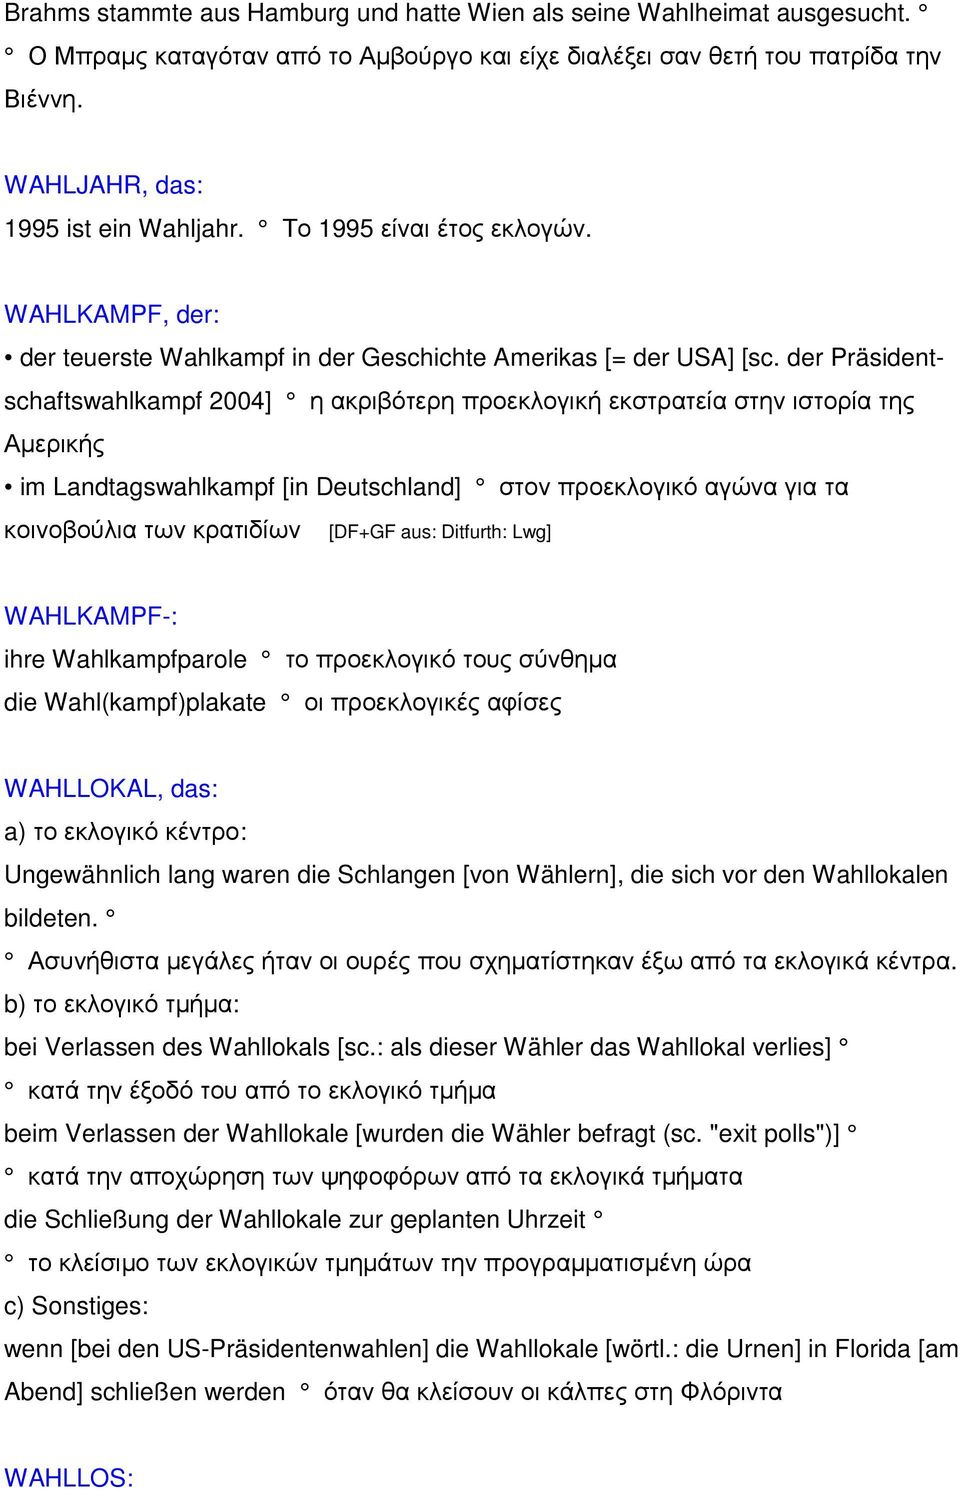 der Präsidentschaftswahlkampf 2004] η ακριβότερη προεκλογική εκστρατεία στην ιστορία της Αµερικής im Landtagswahlkampf [in Deutschland] στον προεκλογικό αγώνα για τα κοινοβούλια των κρατιδίων [DF+GF